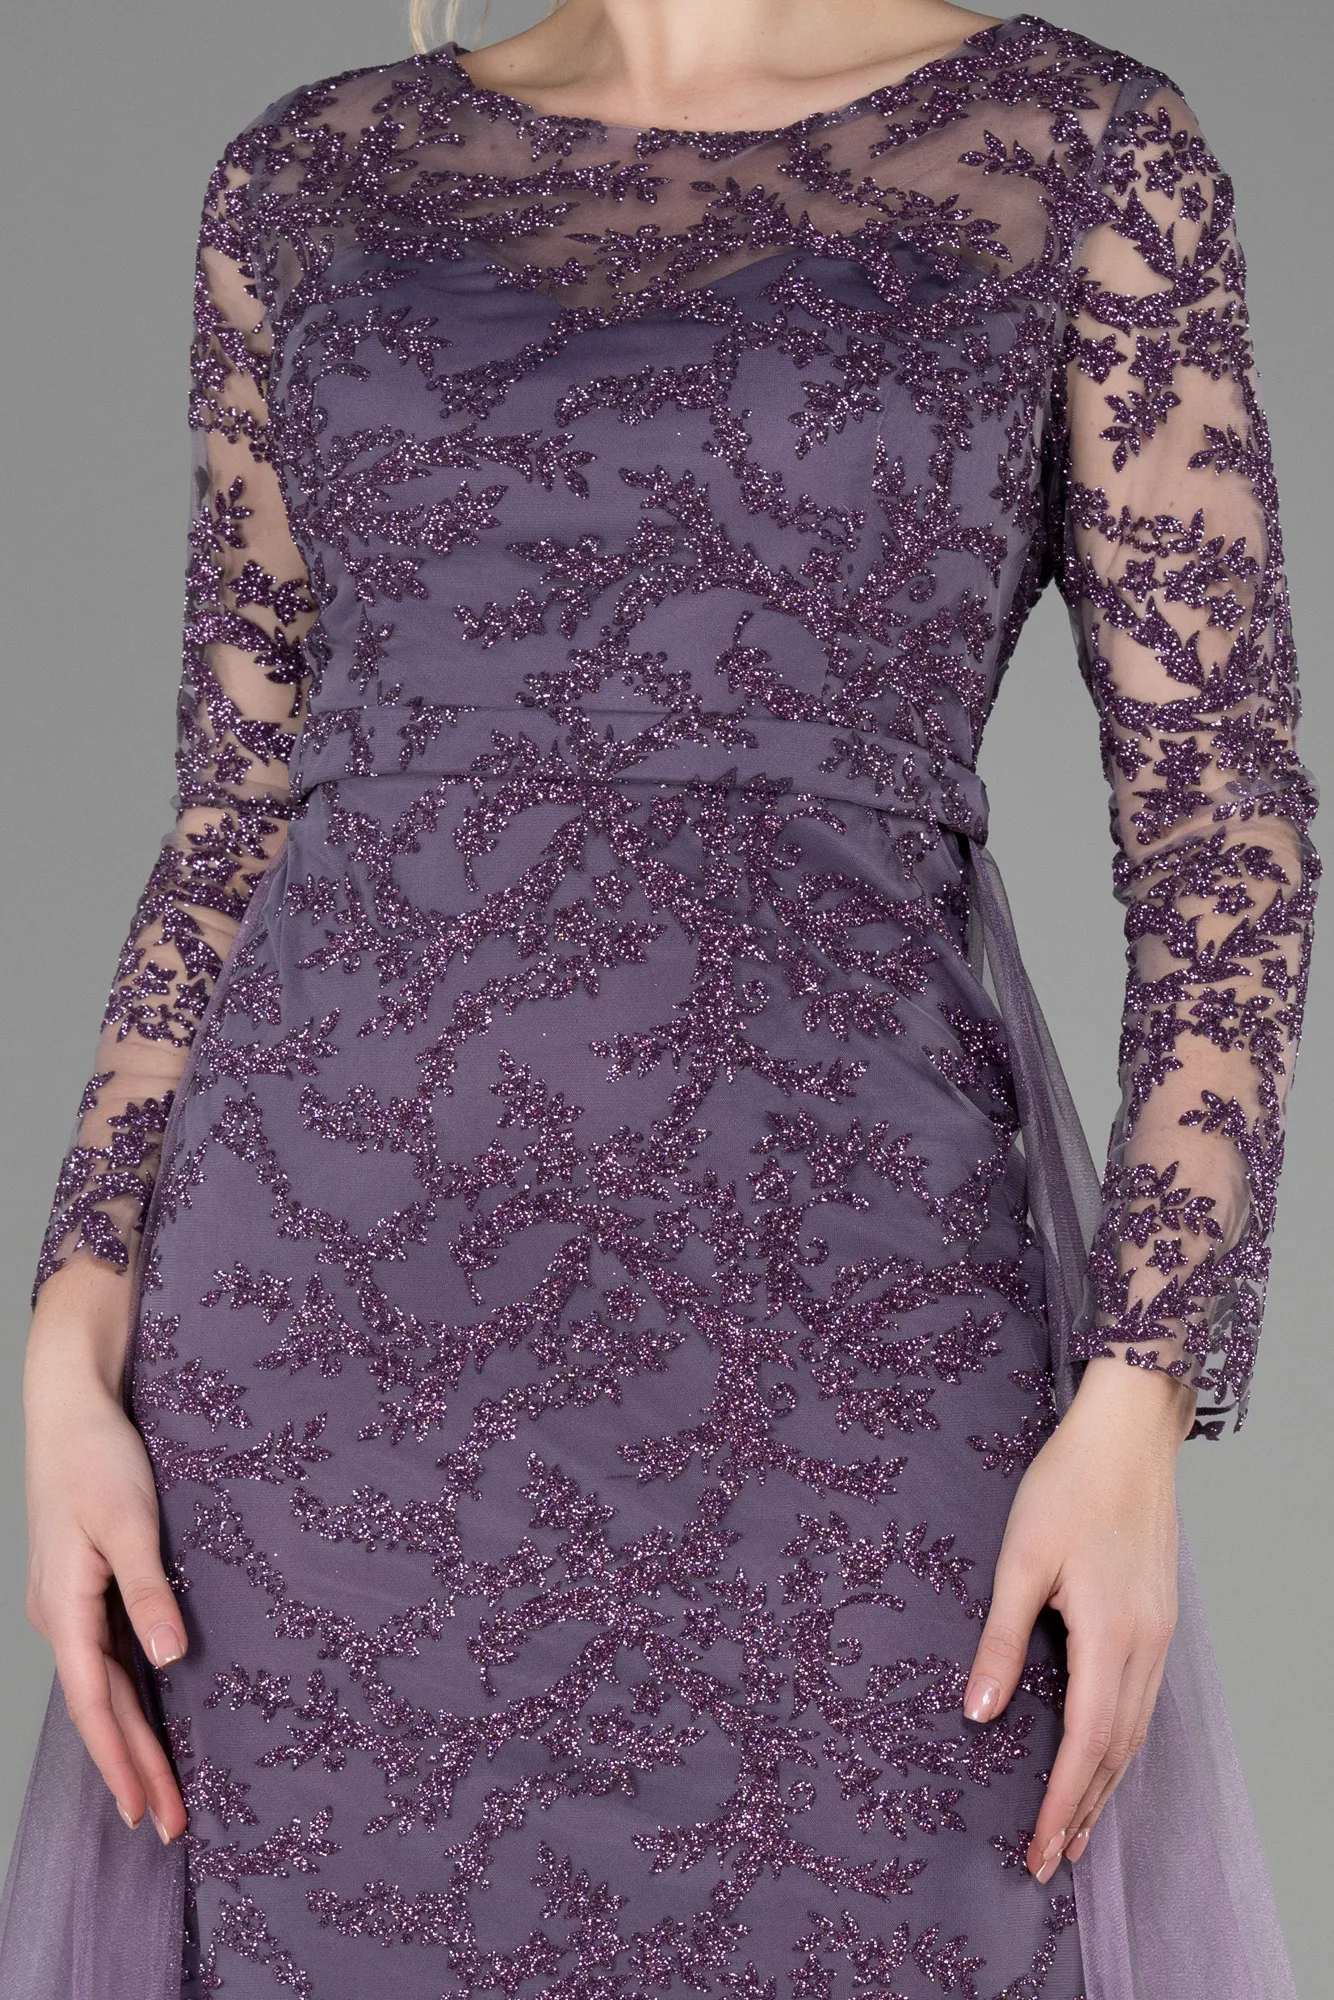 Lavender-Long Evening Dress ABU2237